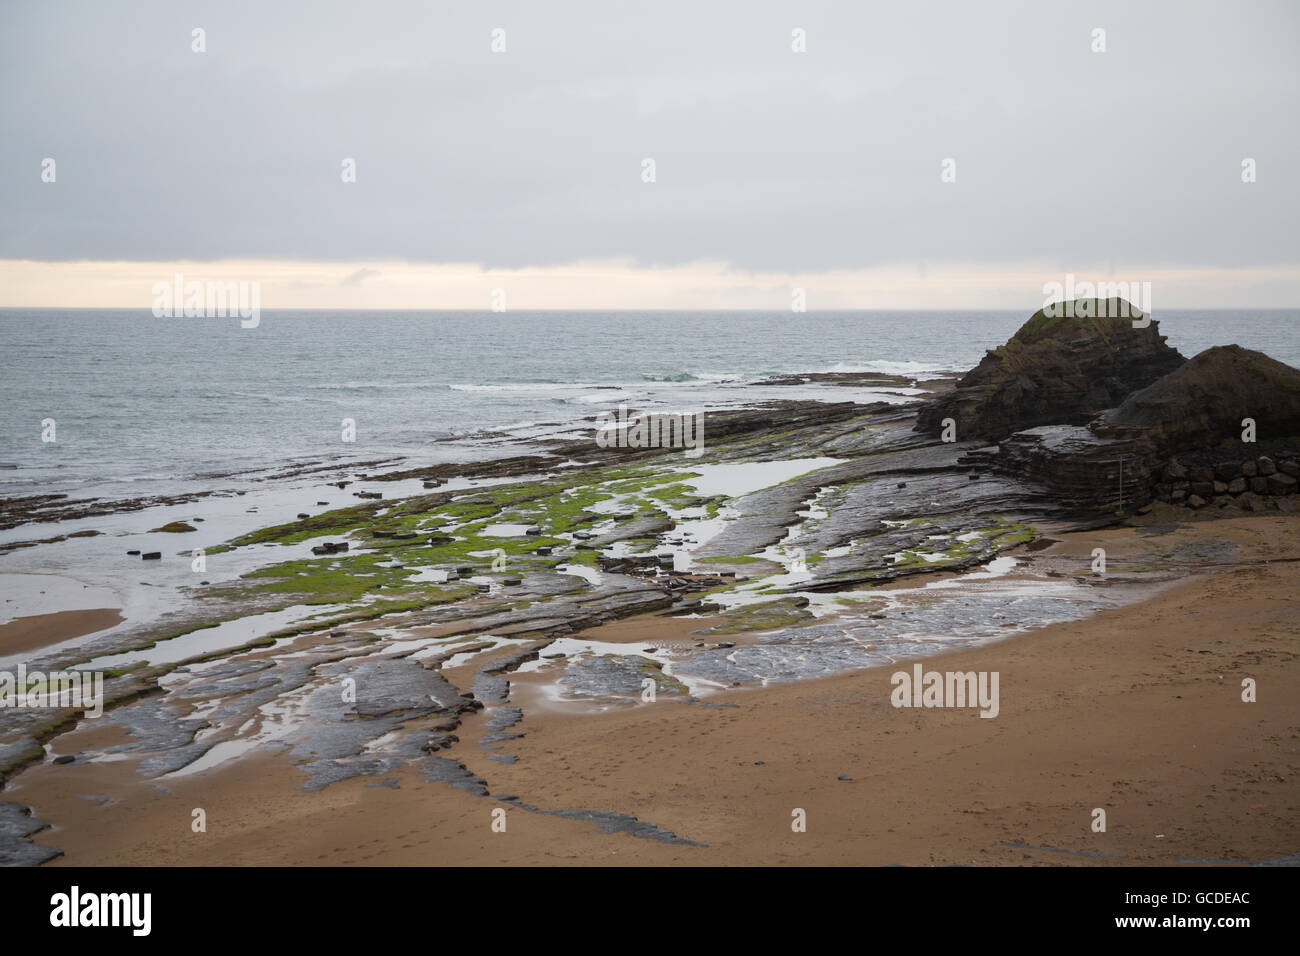 Scenery on the coast of Bundoran in Donegal, Ireland Stock Photo